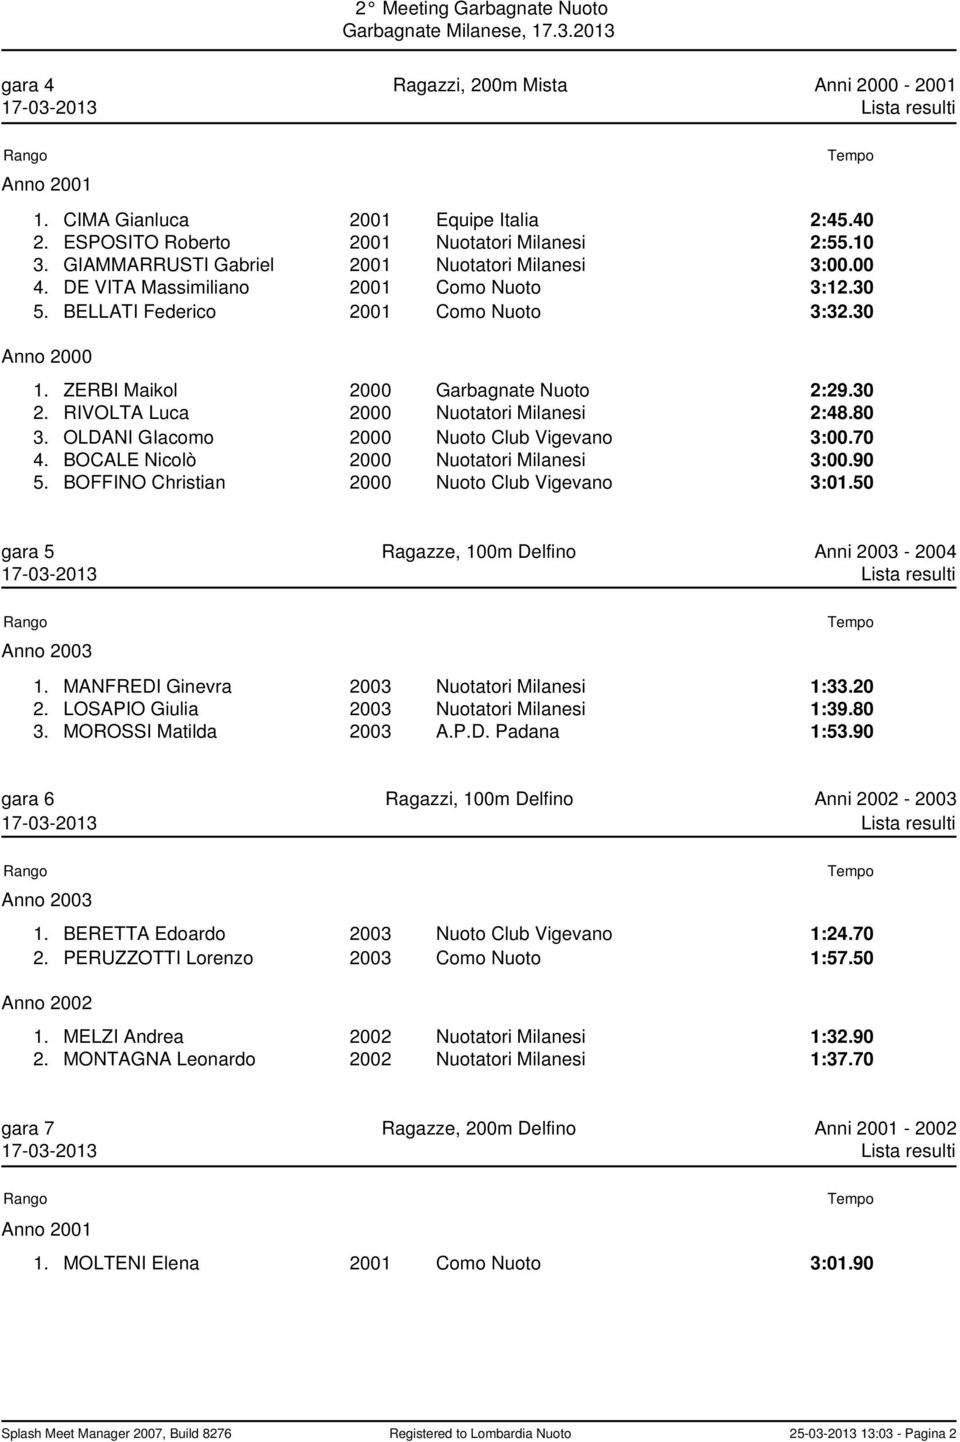 OLDANI GIacomo 2000 Nuoto Club Vigevano 3:00.70 4. BOCALE Nicolò 2000 Nuotatori Milanesi 3:00.90 5. BOFFINO Christian 2000 Nuoto Club Vigevano 3:01.50 gara 5 Ragazze, 100m Delfino Anni 2003-2004 1.